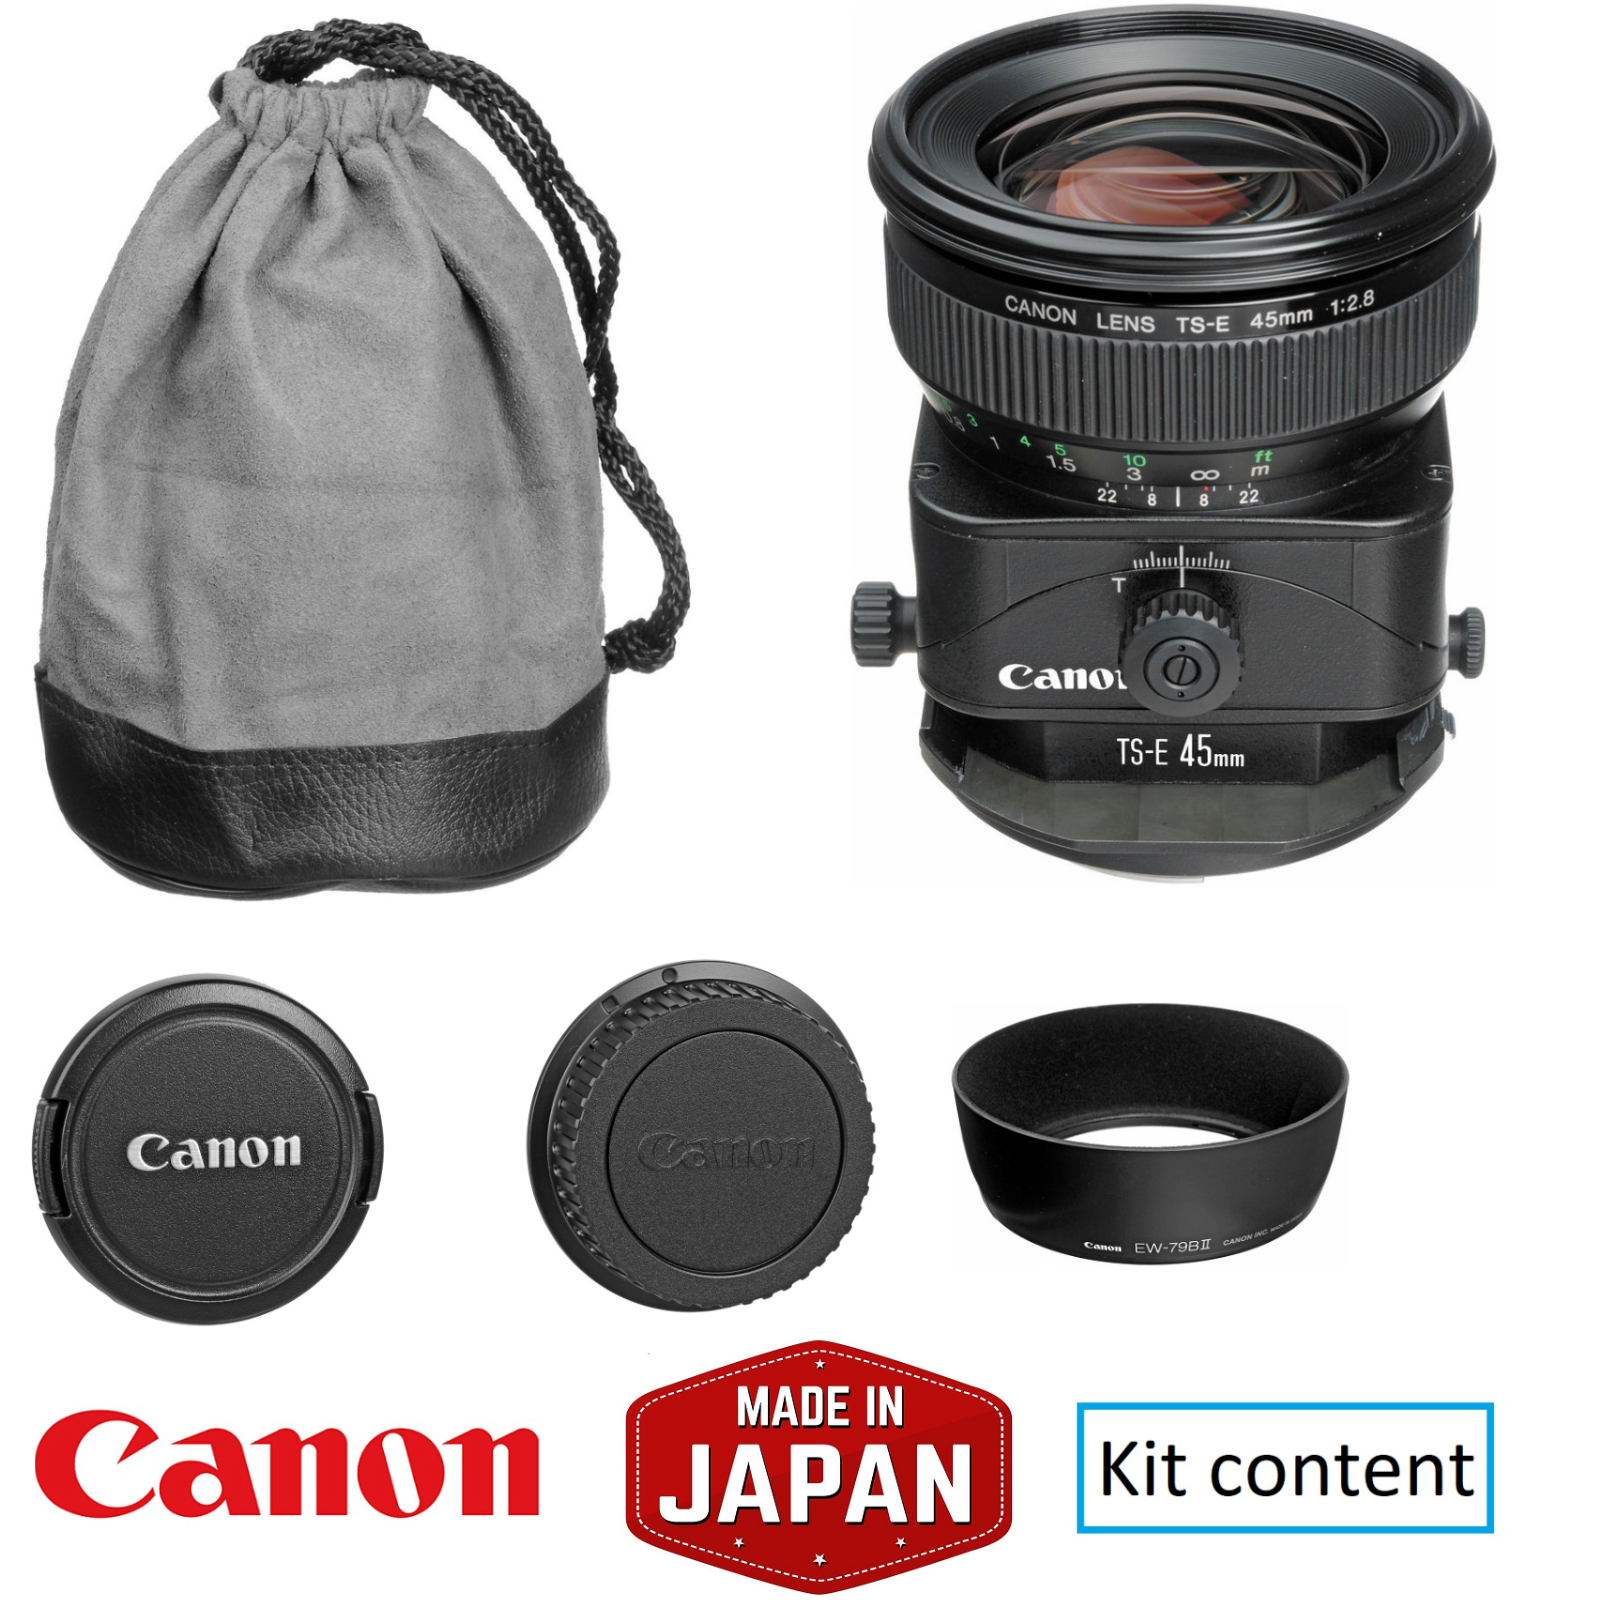 Canon TS-E 45mm F2.8 Tilt and Shift Lens